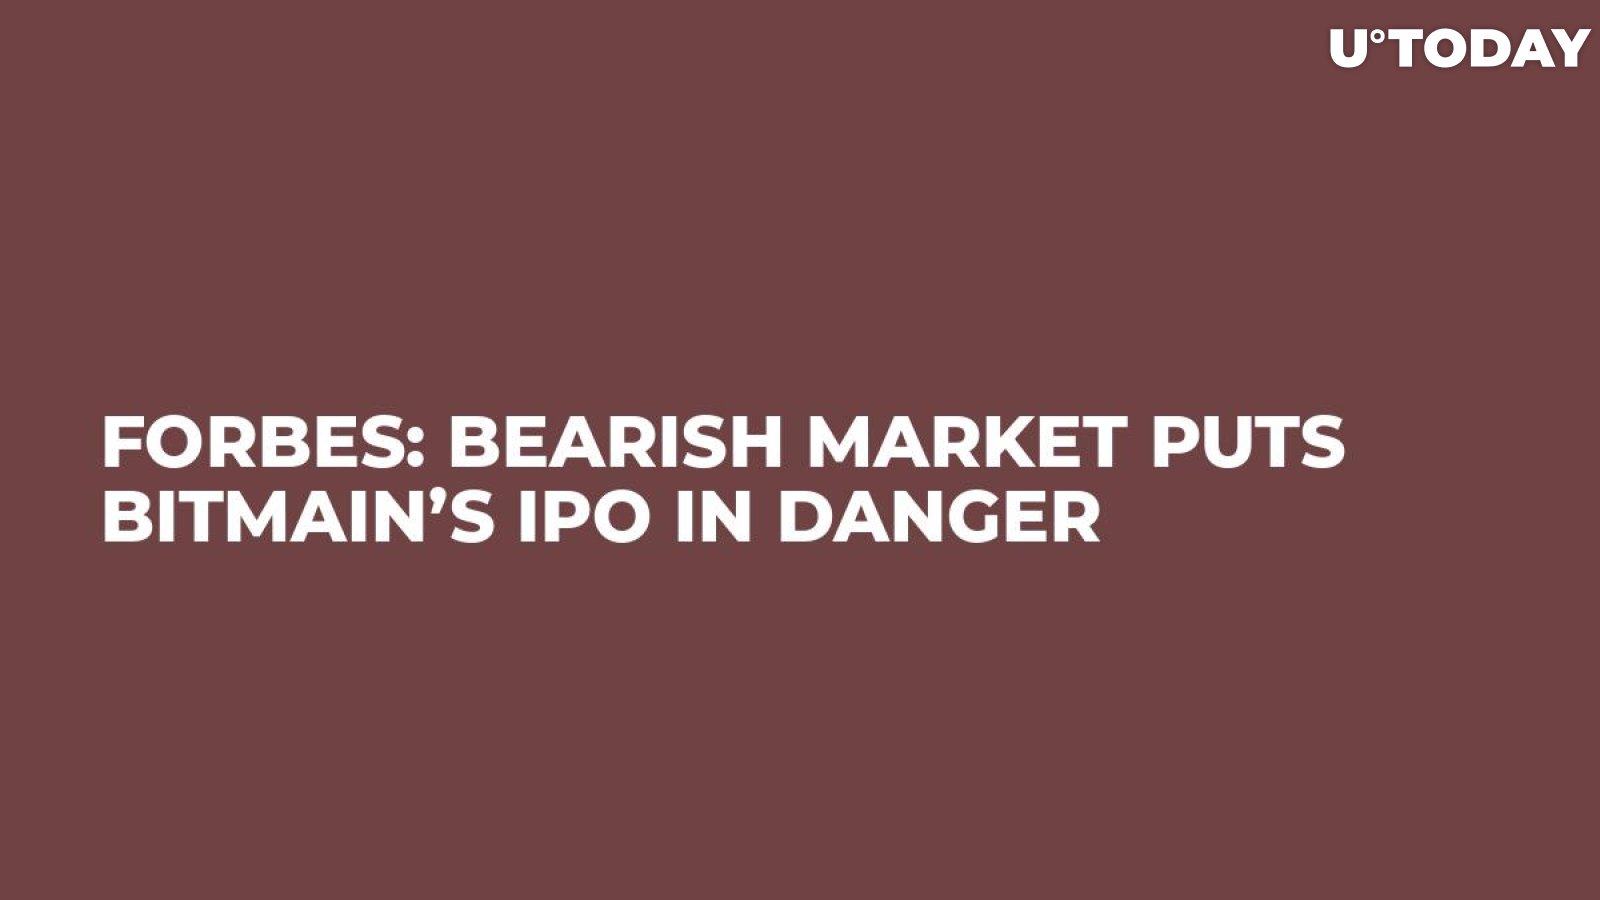 Forbes: Bearish Market Puts Bitmain’s IPO in Danger  